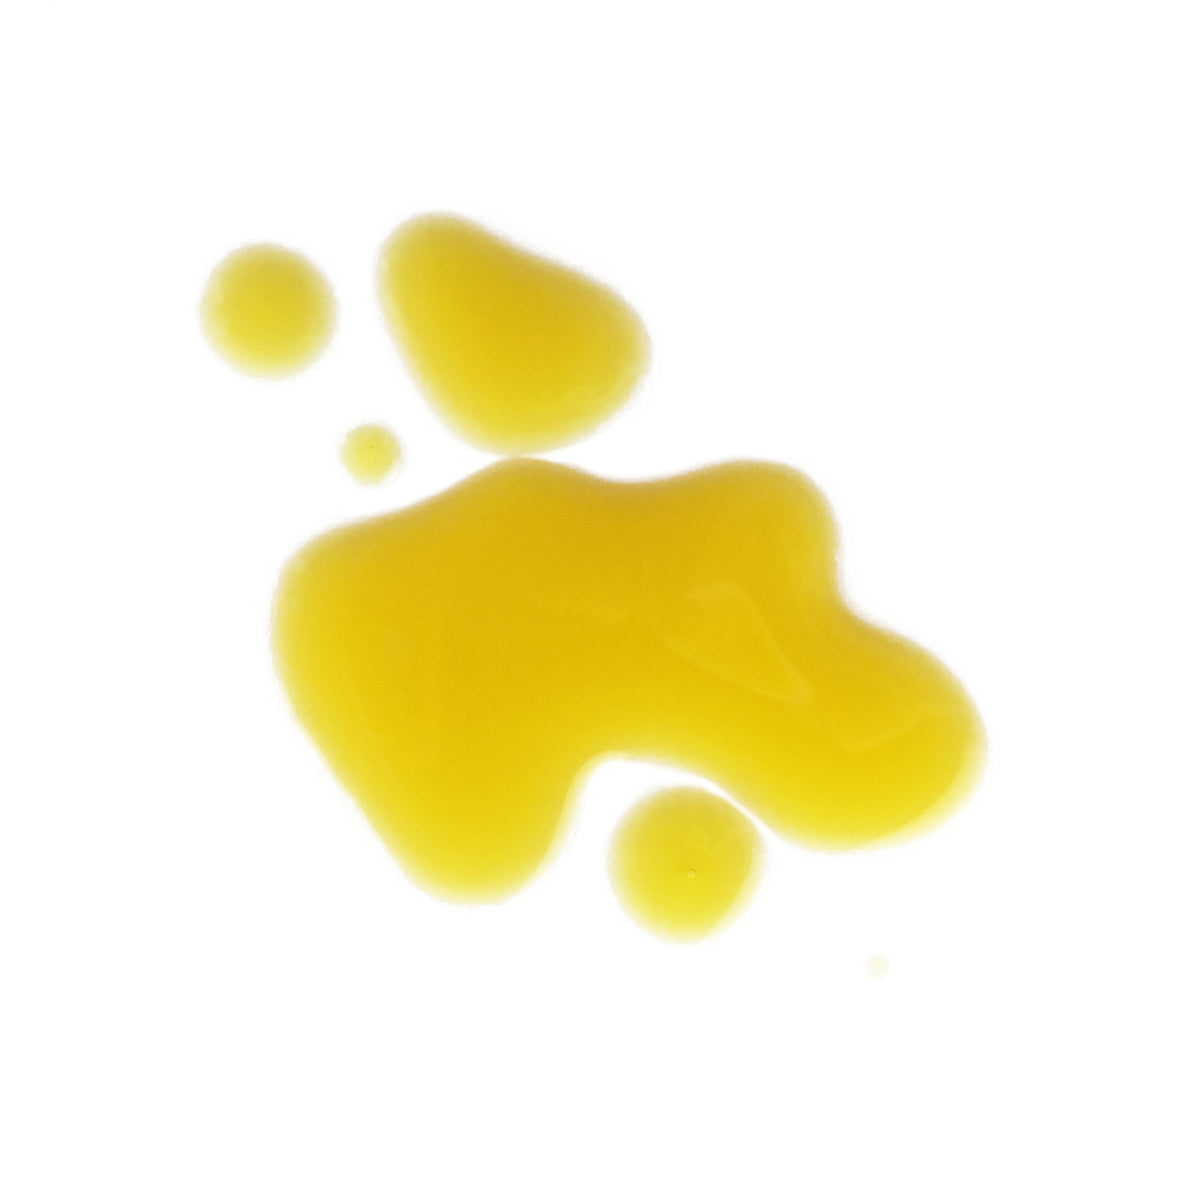 Beauty Elixir III: Prismatic Array yellow-orange-tinted oil texture.